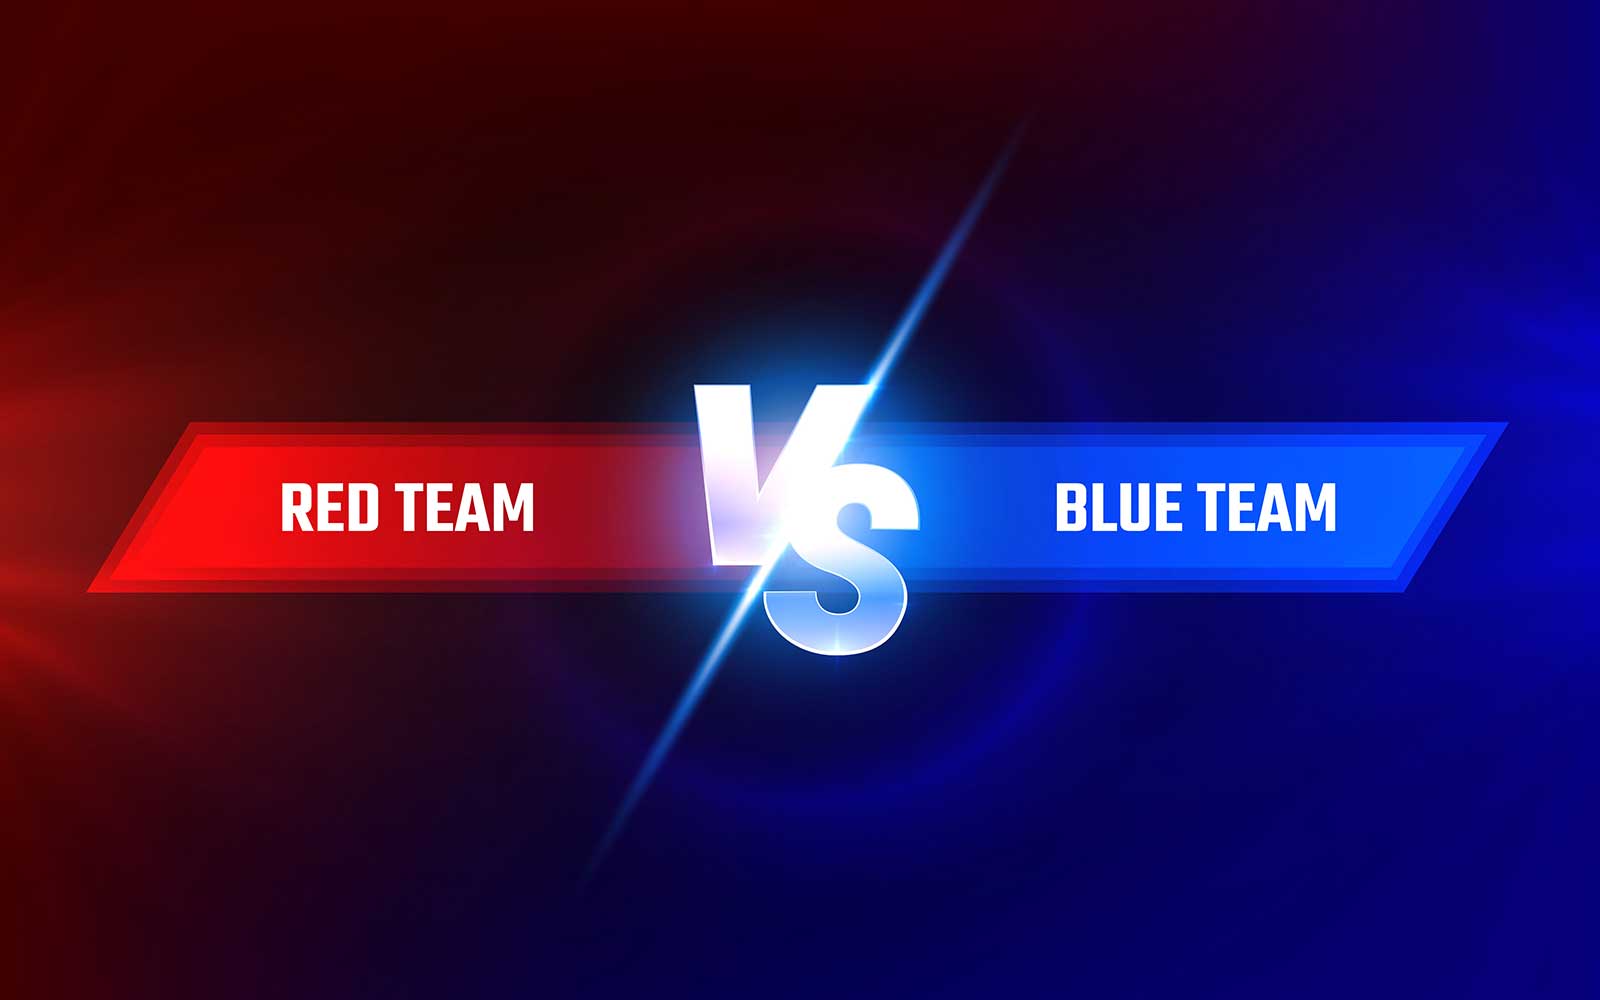 Red Team vs Blue Team